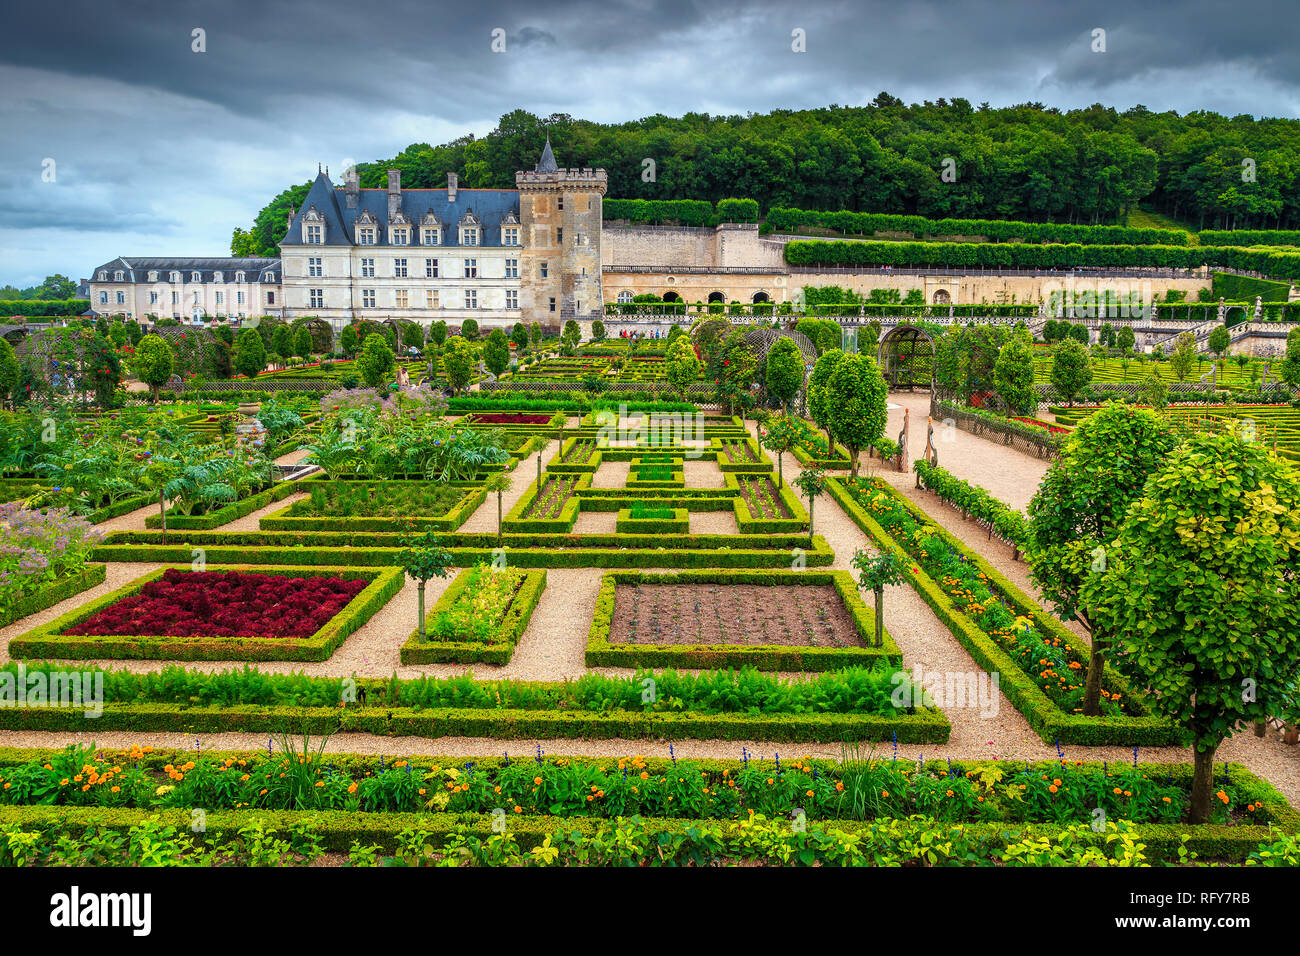 Super Ausflugsziel, prächtige berühmten Schloss Villandry, bunte ornamentale Garten mit Blumen und Gemüse, Loire Tal, Frankreich, Europ. Stockfoto